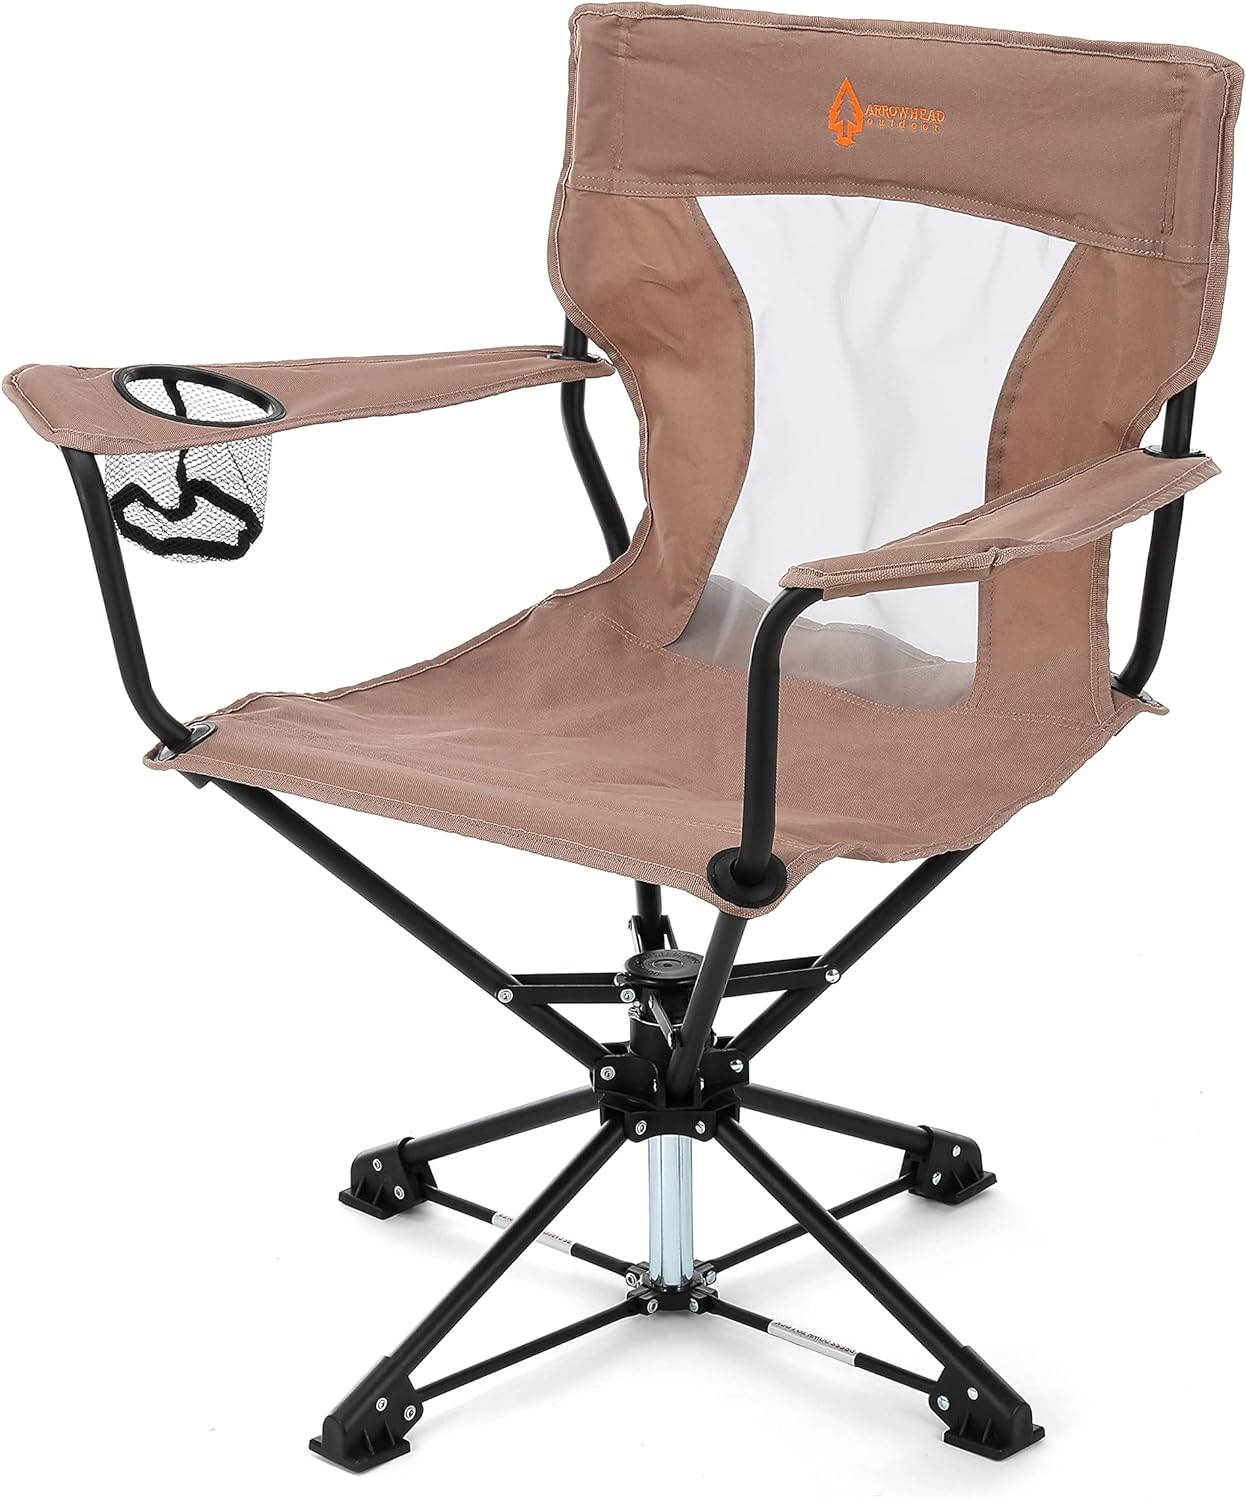 Camping Swivel Chair 360 Degree Swivel Chair Outdoor Leisure Picnic Chair  Field Fishing Chair Portable Moon Chair